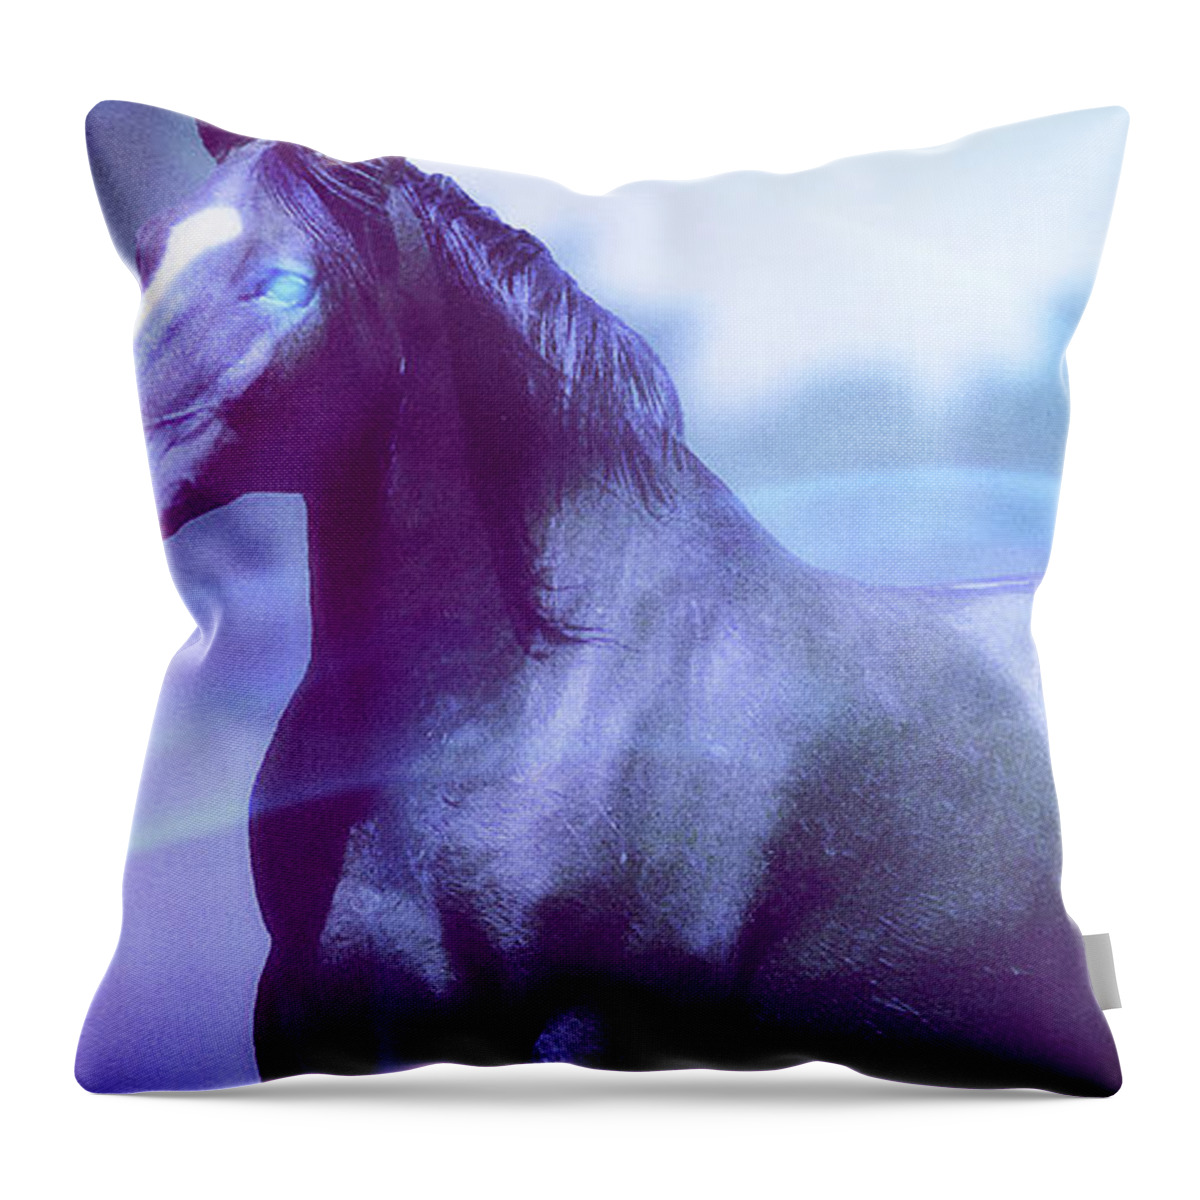 Fantasy Throw Pillow featuring the digital art Art - Mighty Horse by Matthias Zegveld